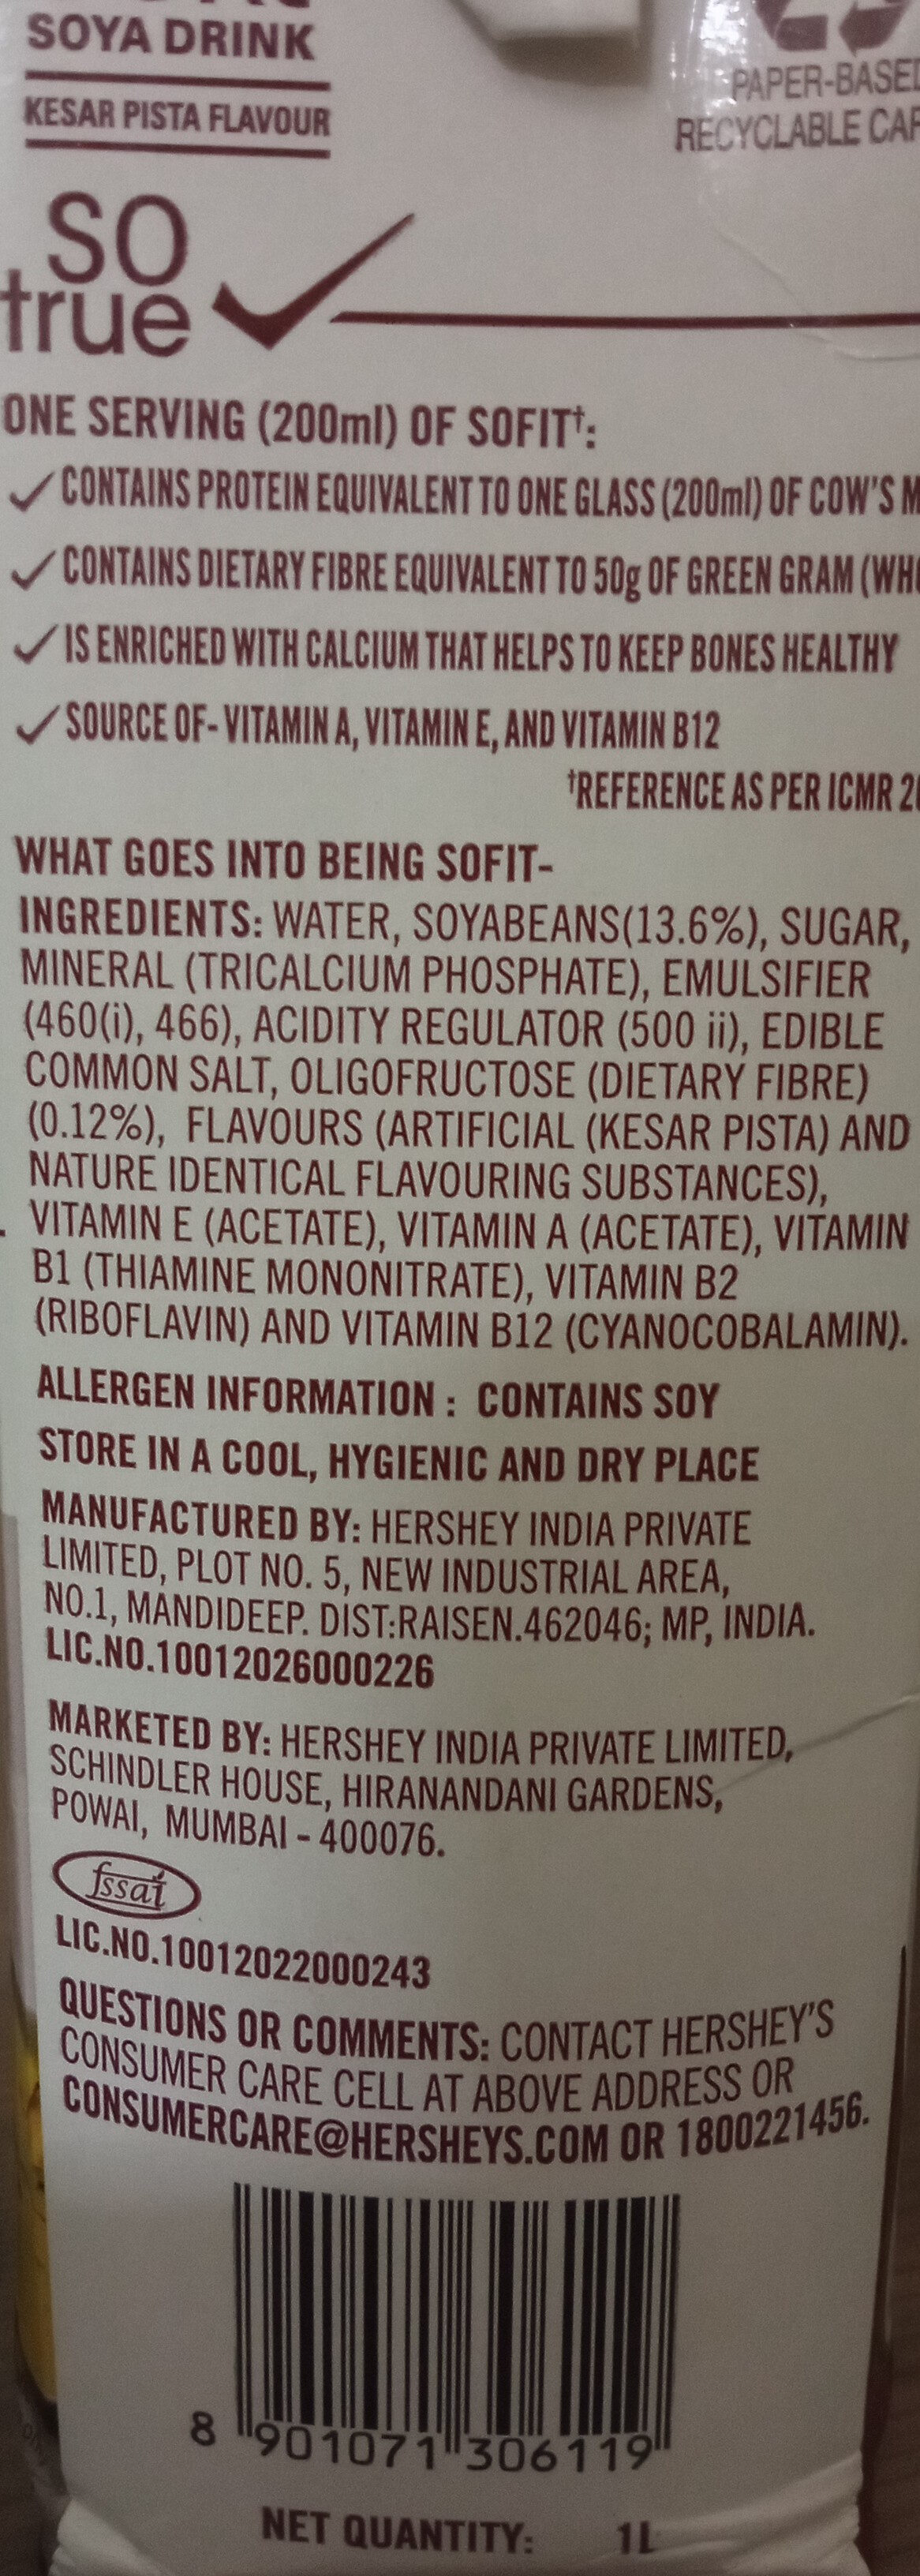 Sofit Soya Drink (Kesar Pista Flavour) - Ingredients